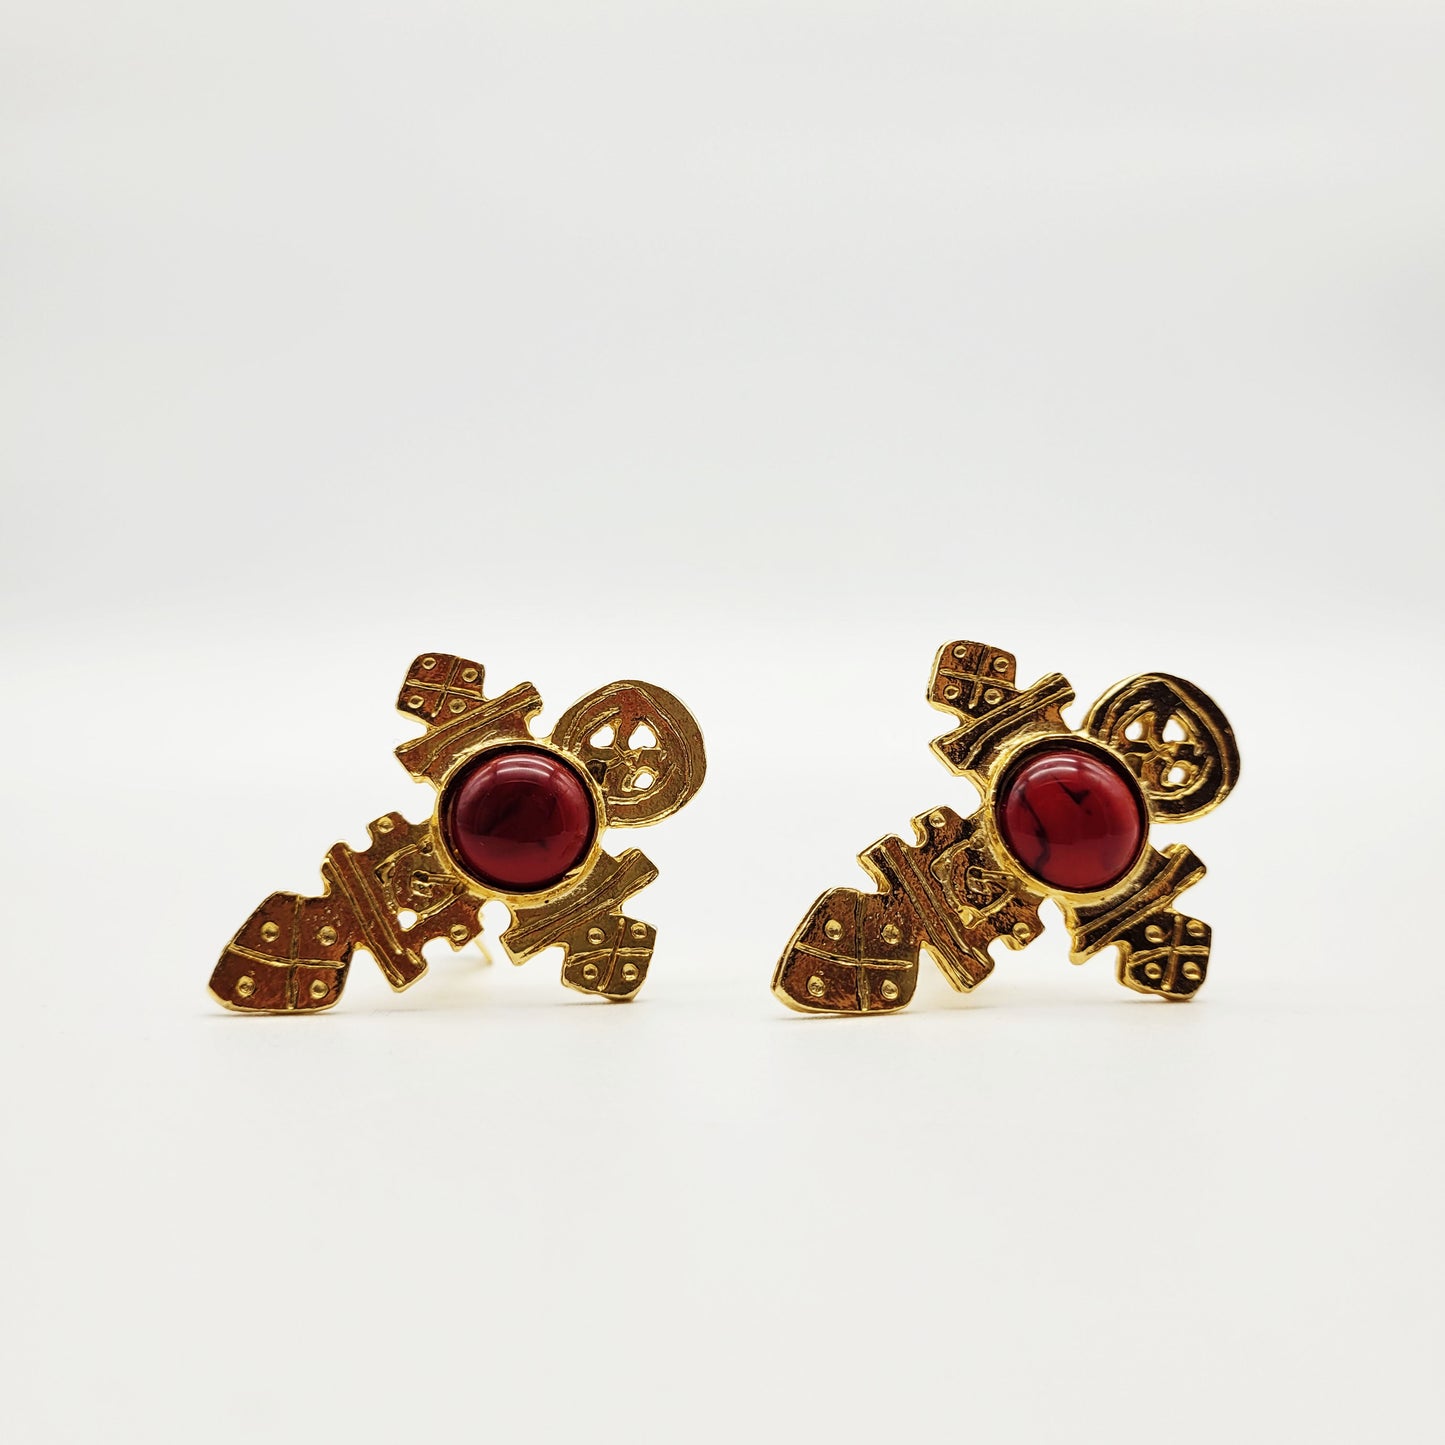 Vintage cross earrings